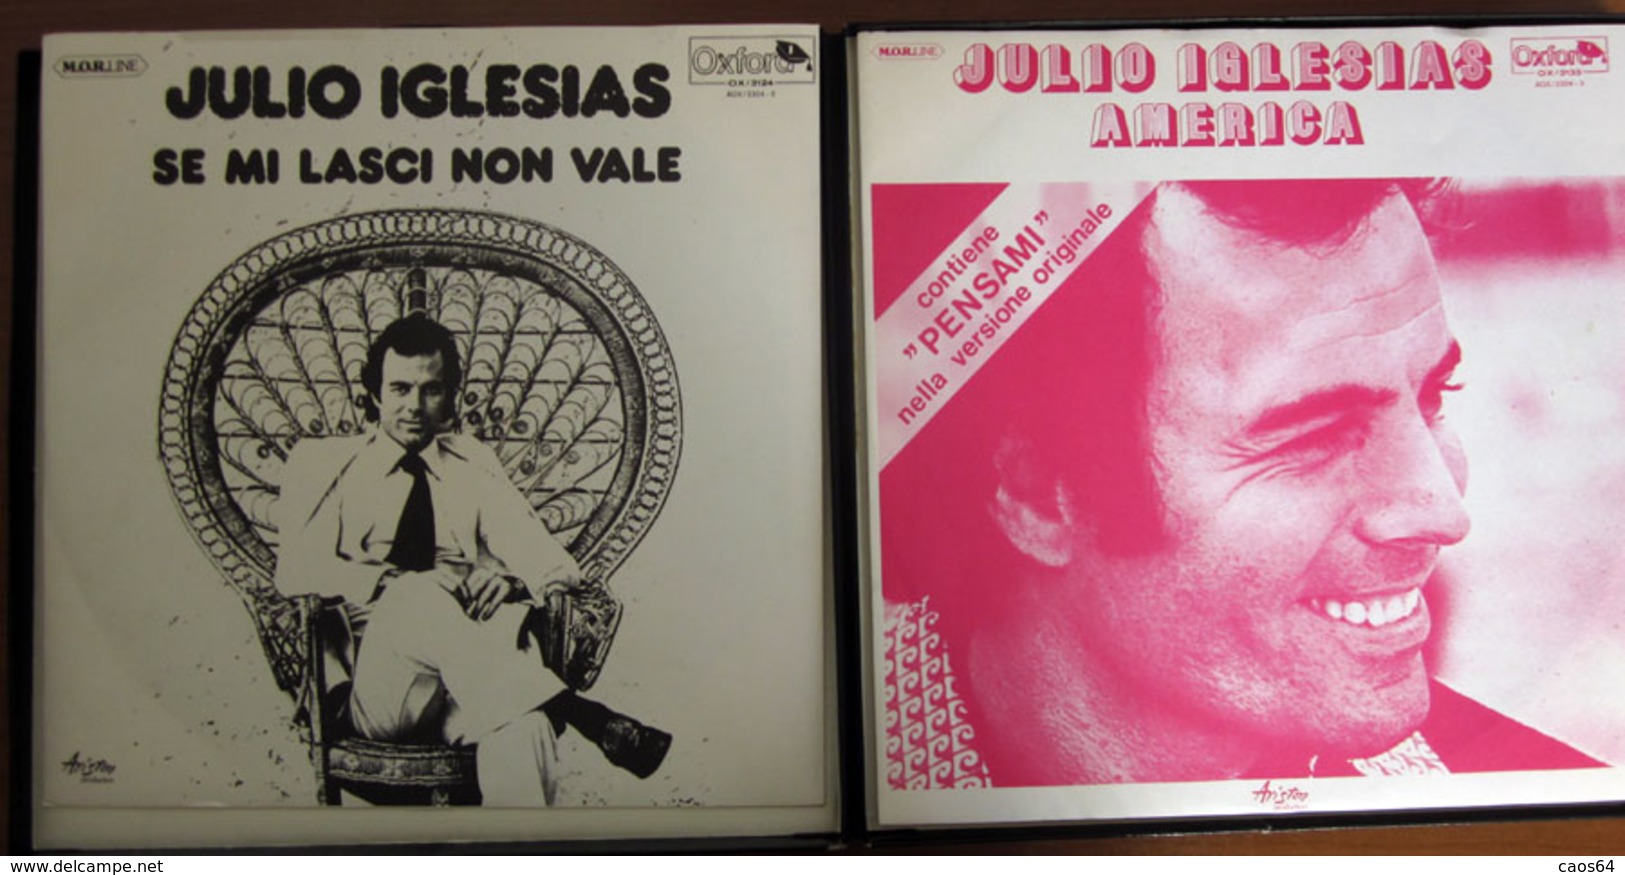 Julio Iglesias ‎ Special  Oxford ‎ AOX/3304  3  Vinyl LP Compilation - Compilations